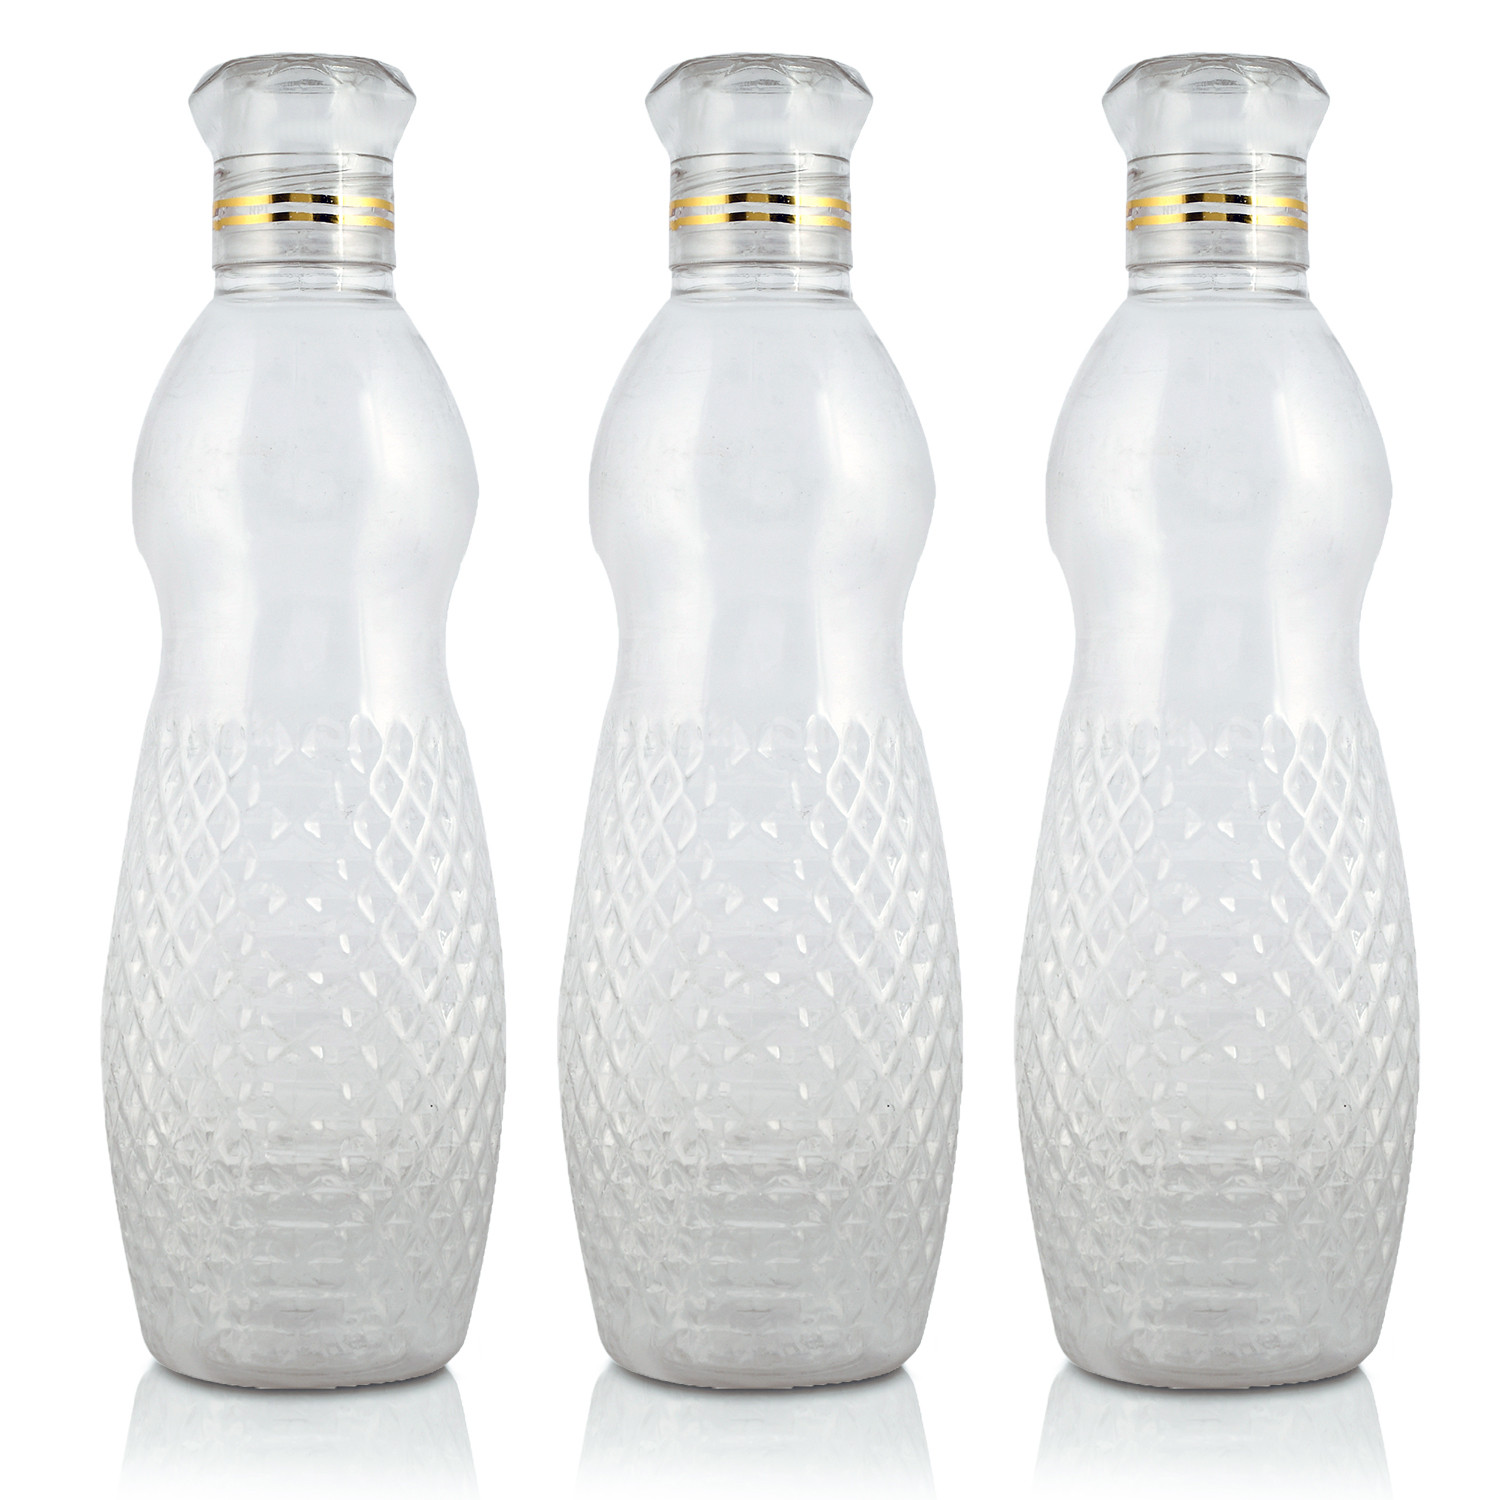 Kuber Industries Plastic Crystal Design Water Bottle For Home & Traveling, 1Ltr. (Transparent) 54KM4301